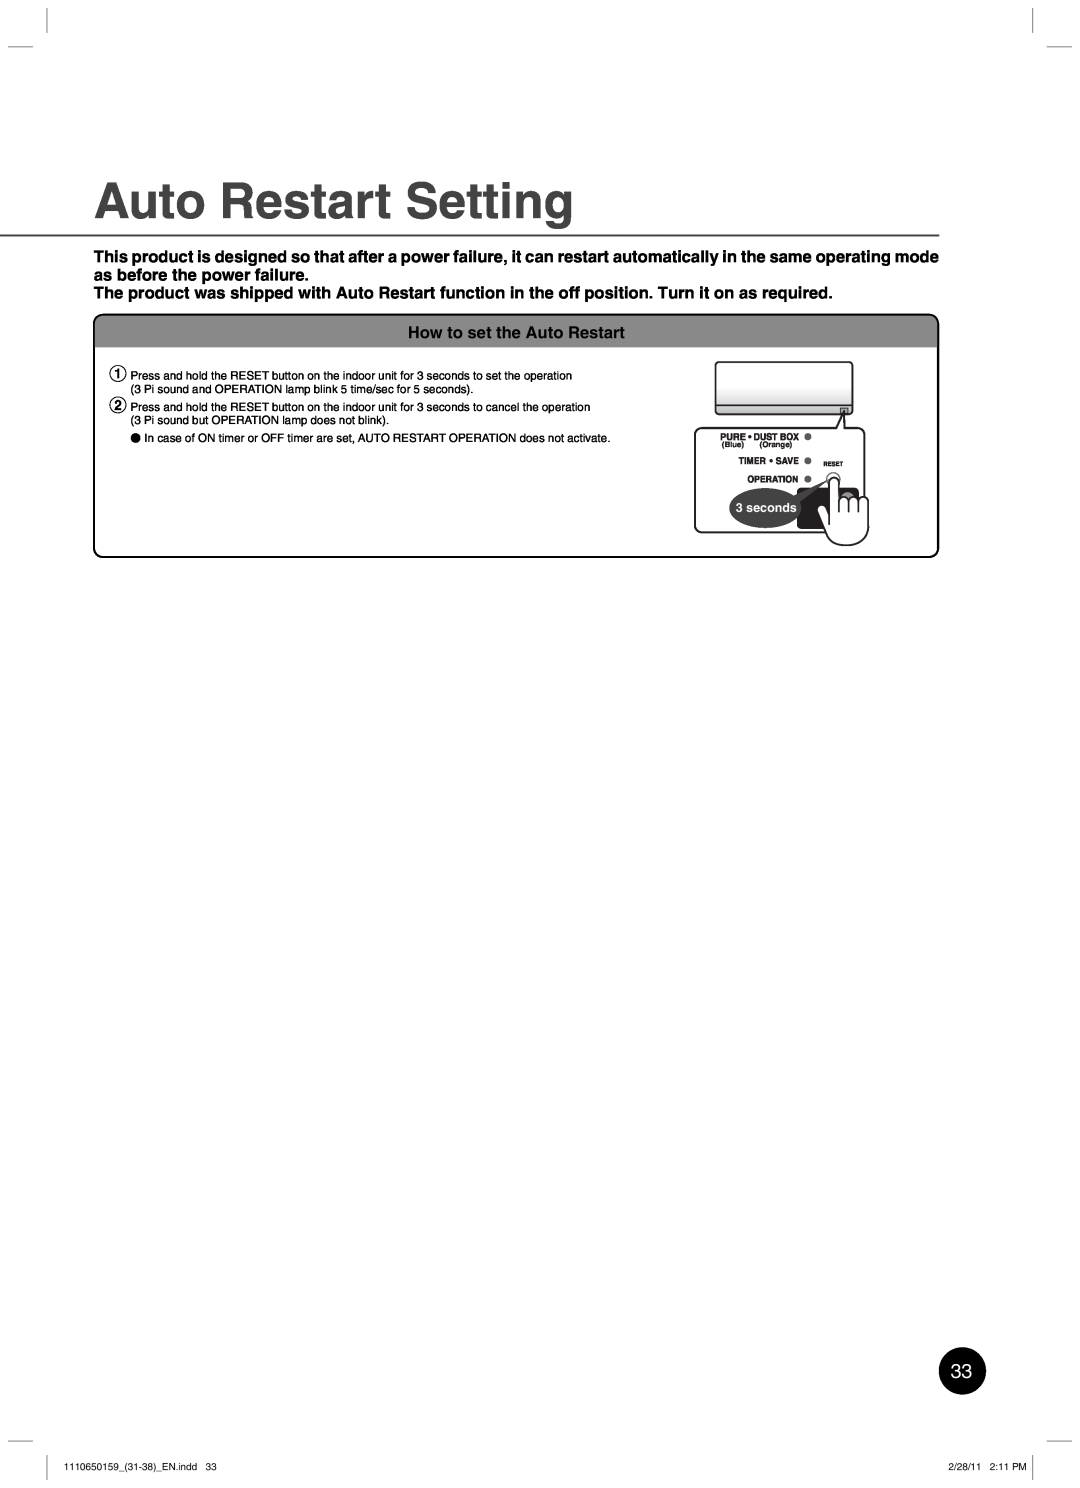 Toshiba RAS-10JKCVP owner manual Auto Restart Setting, How to set the Auto Restart 